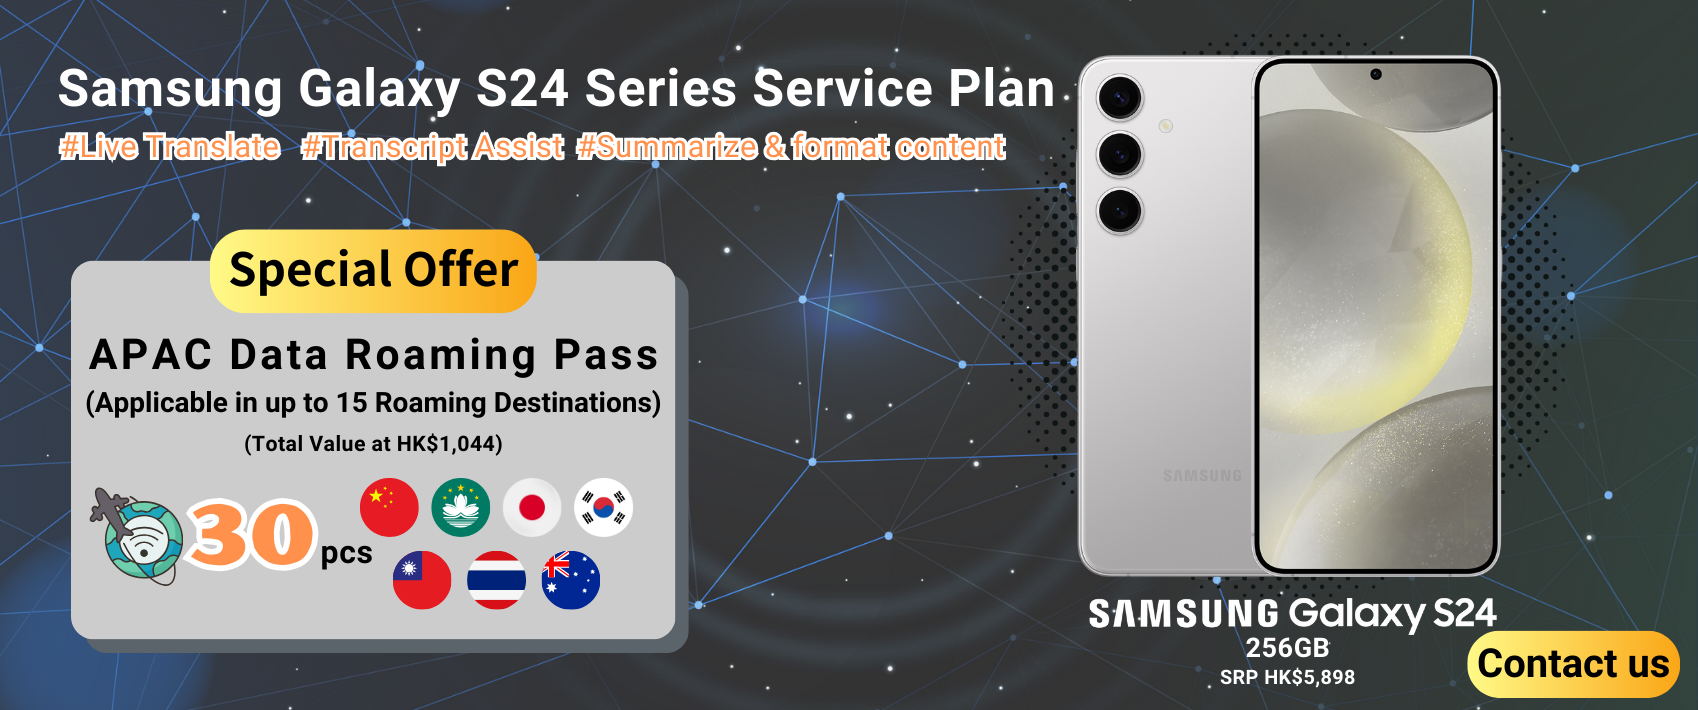 Samsung Galaxy S24 Series Service Plan